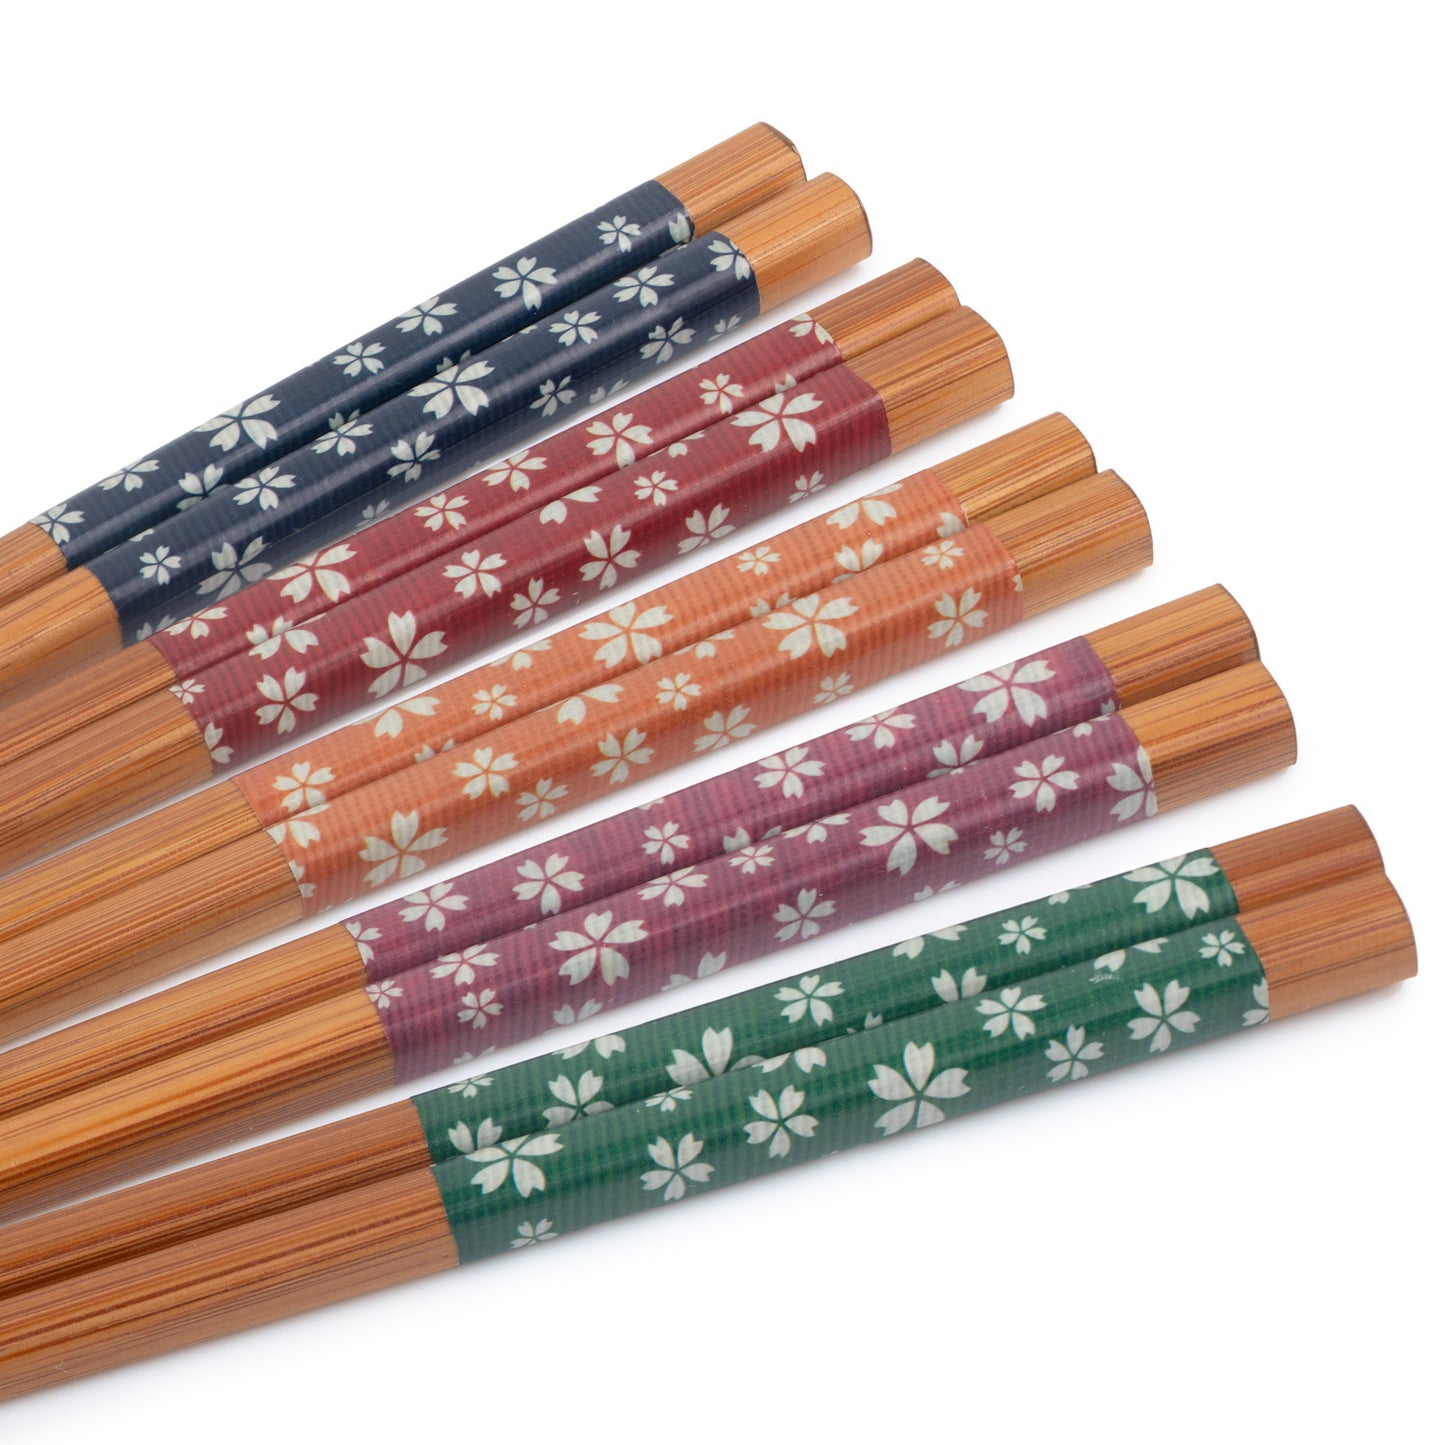 Bamboo Cherry Blossom Japanese Chopstick Gift Set handles